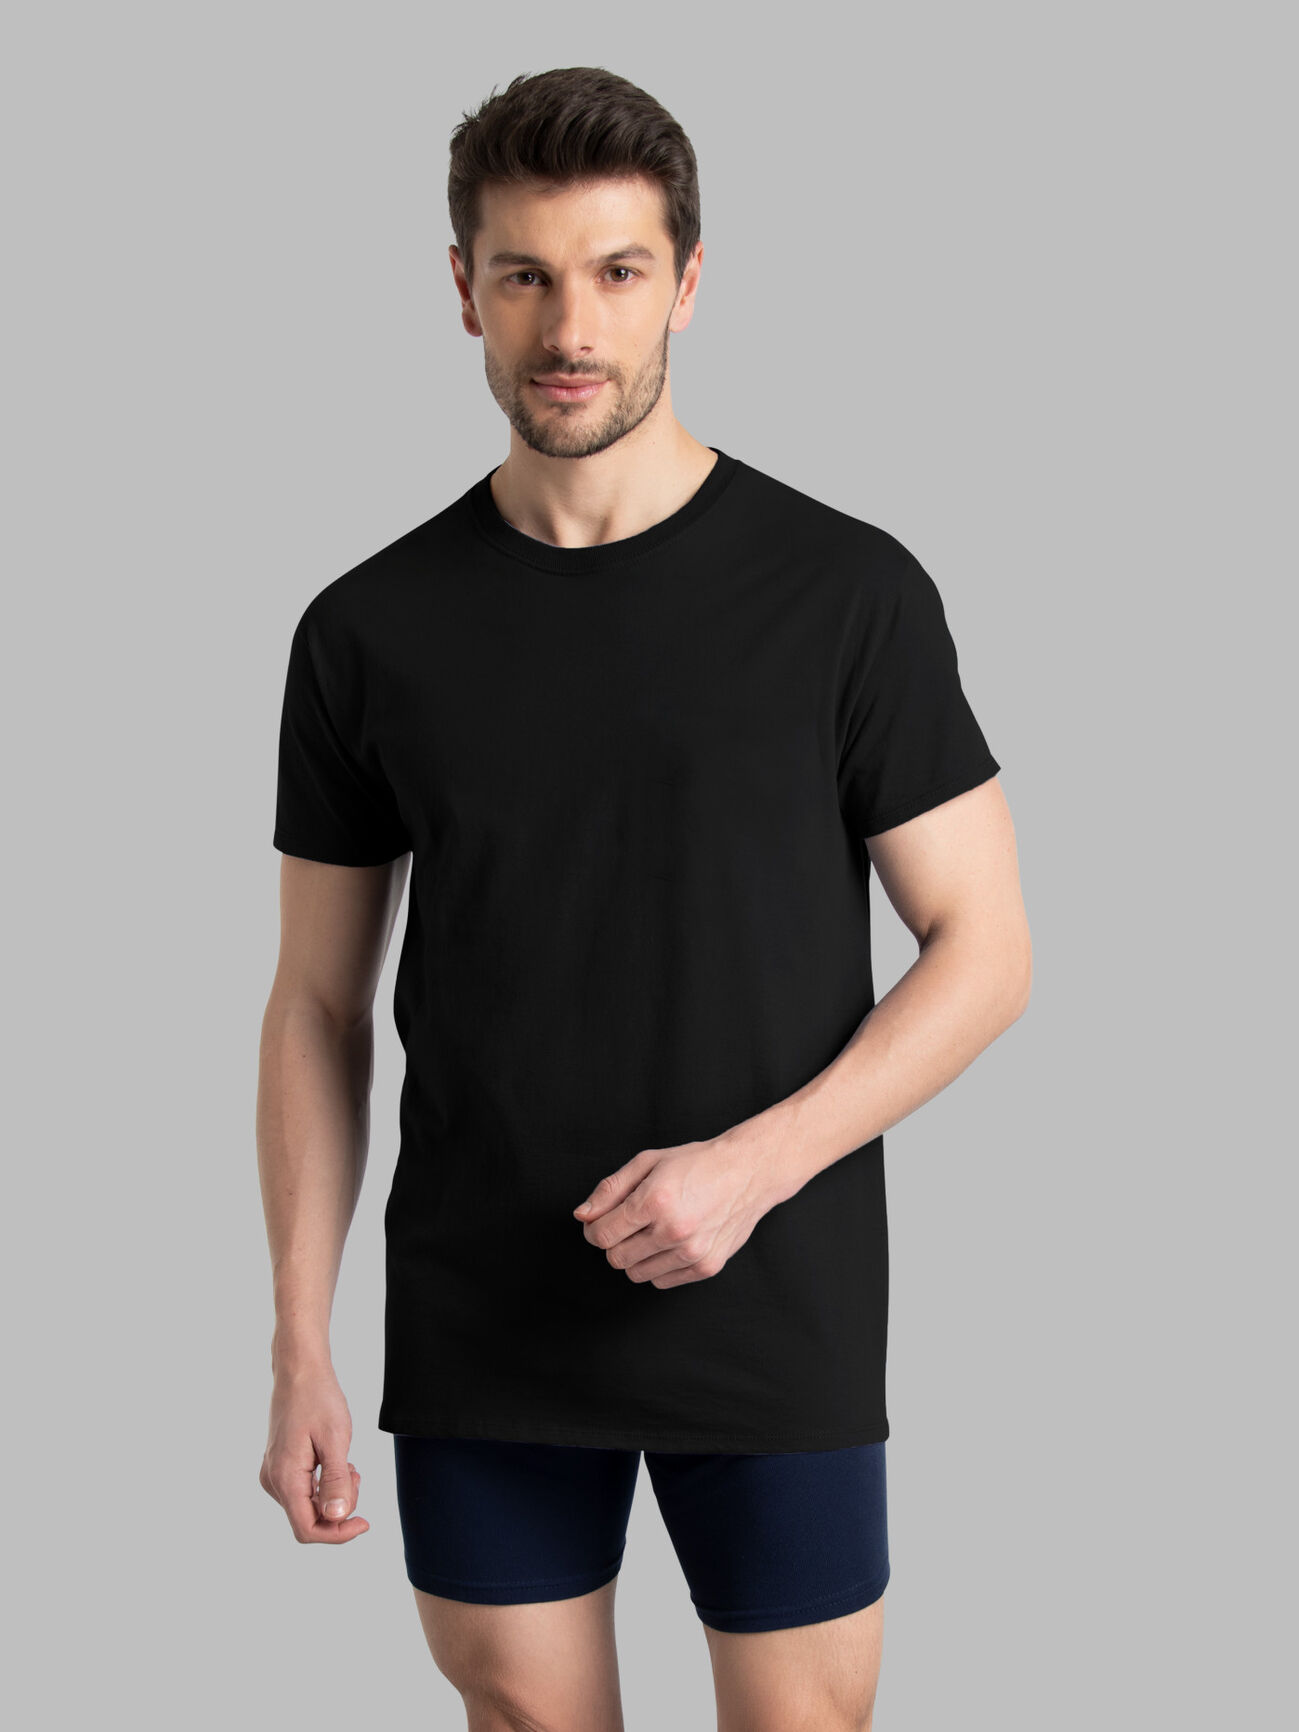 Baby Crew Neck T-Shirts – 100% Cotton